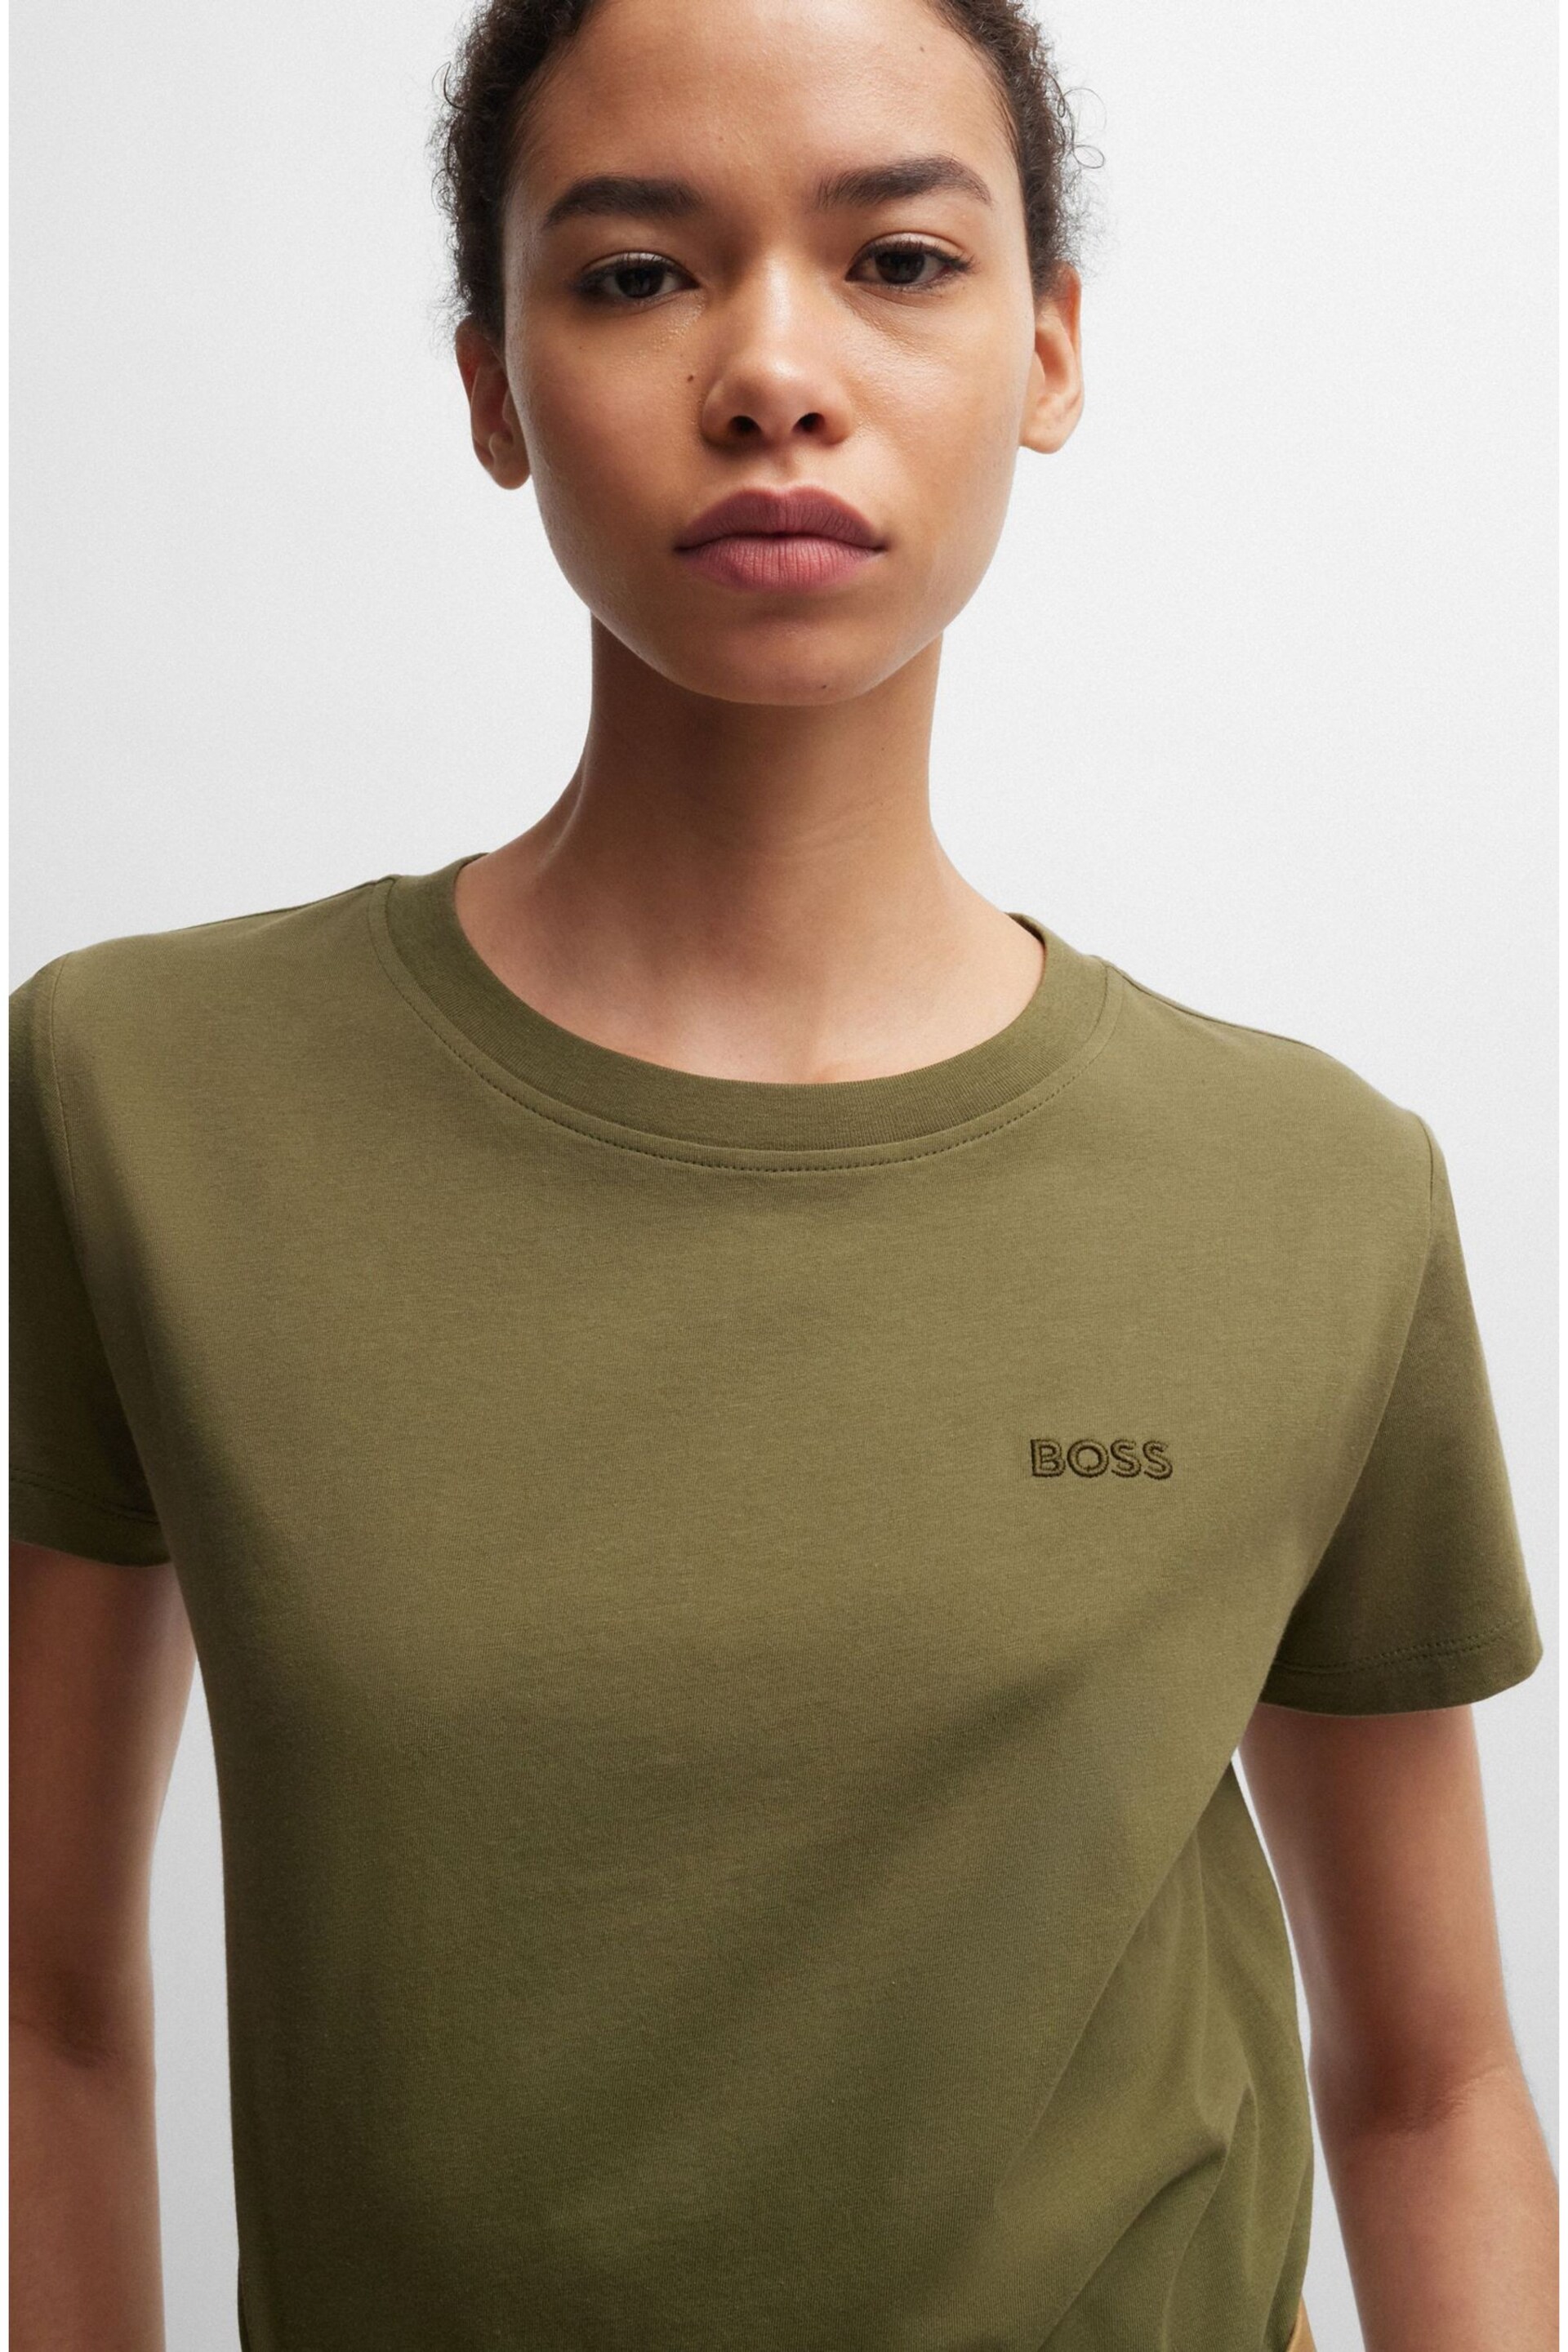 BOSS Green Slim Fit Cotton Jersey T-Shirt - Image 4 of 5